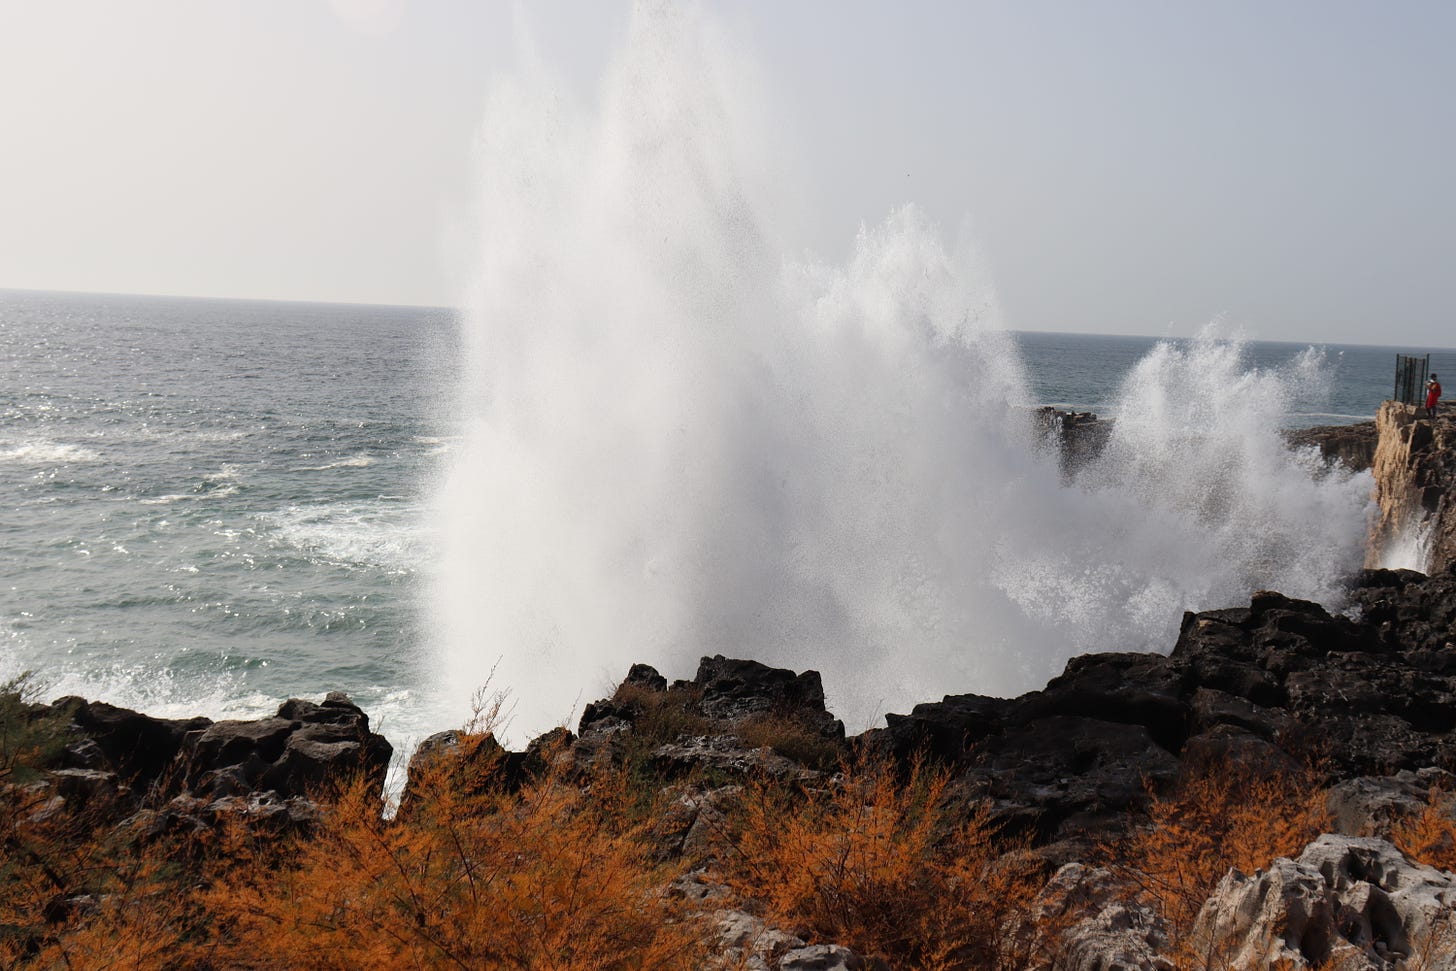 Waves crashing on cliffs